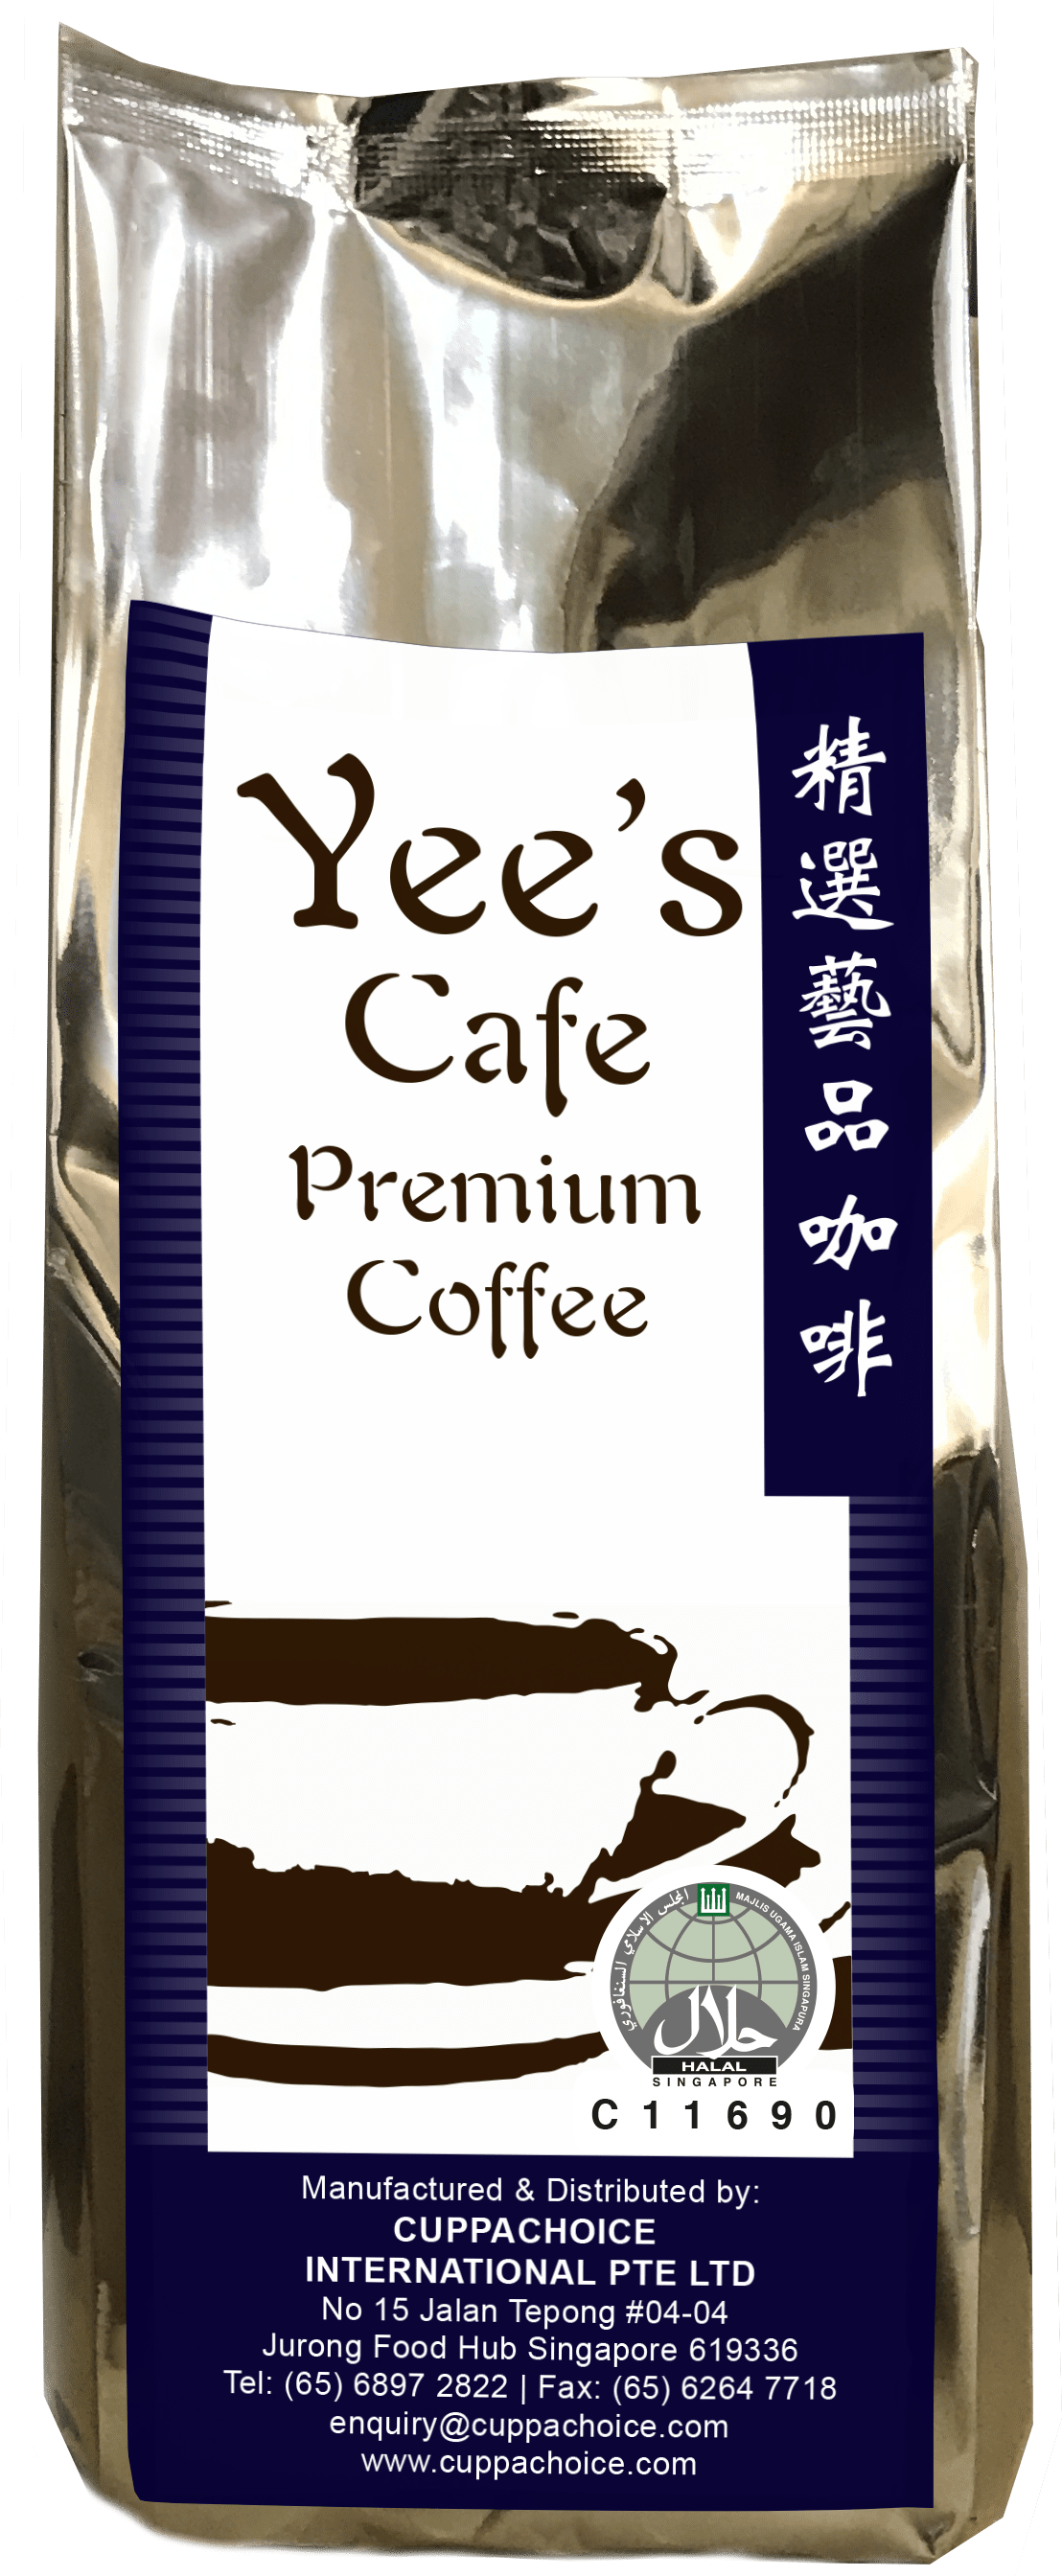 Yee's Cafe Premium Coffee